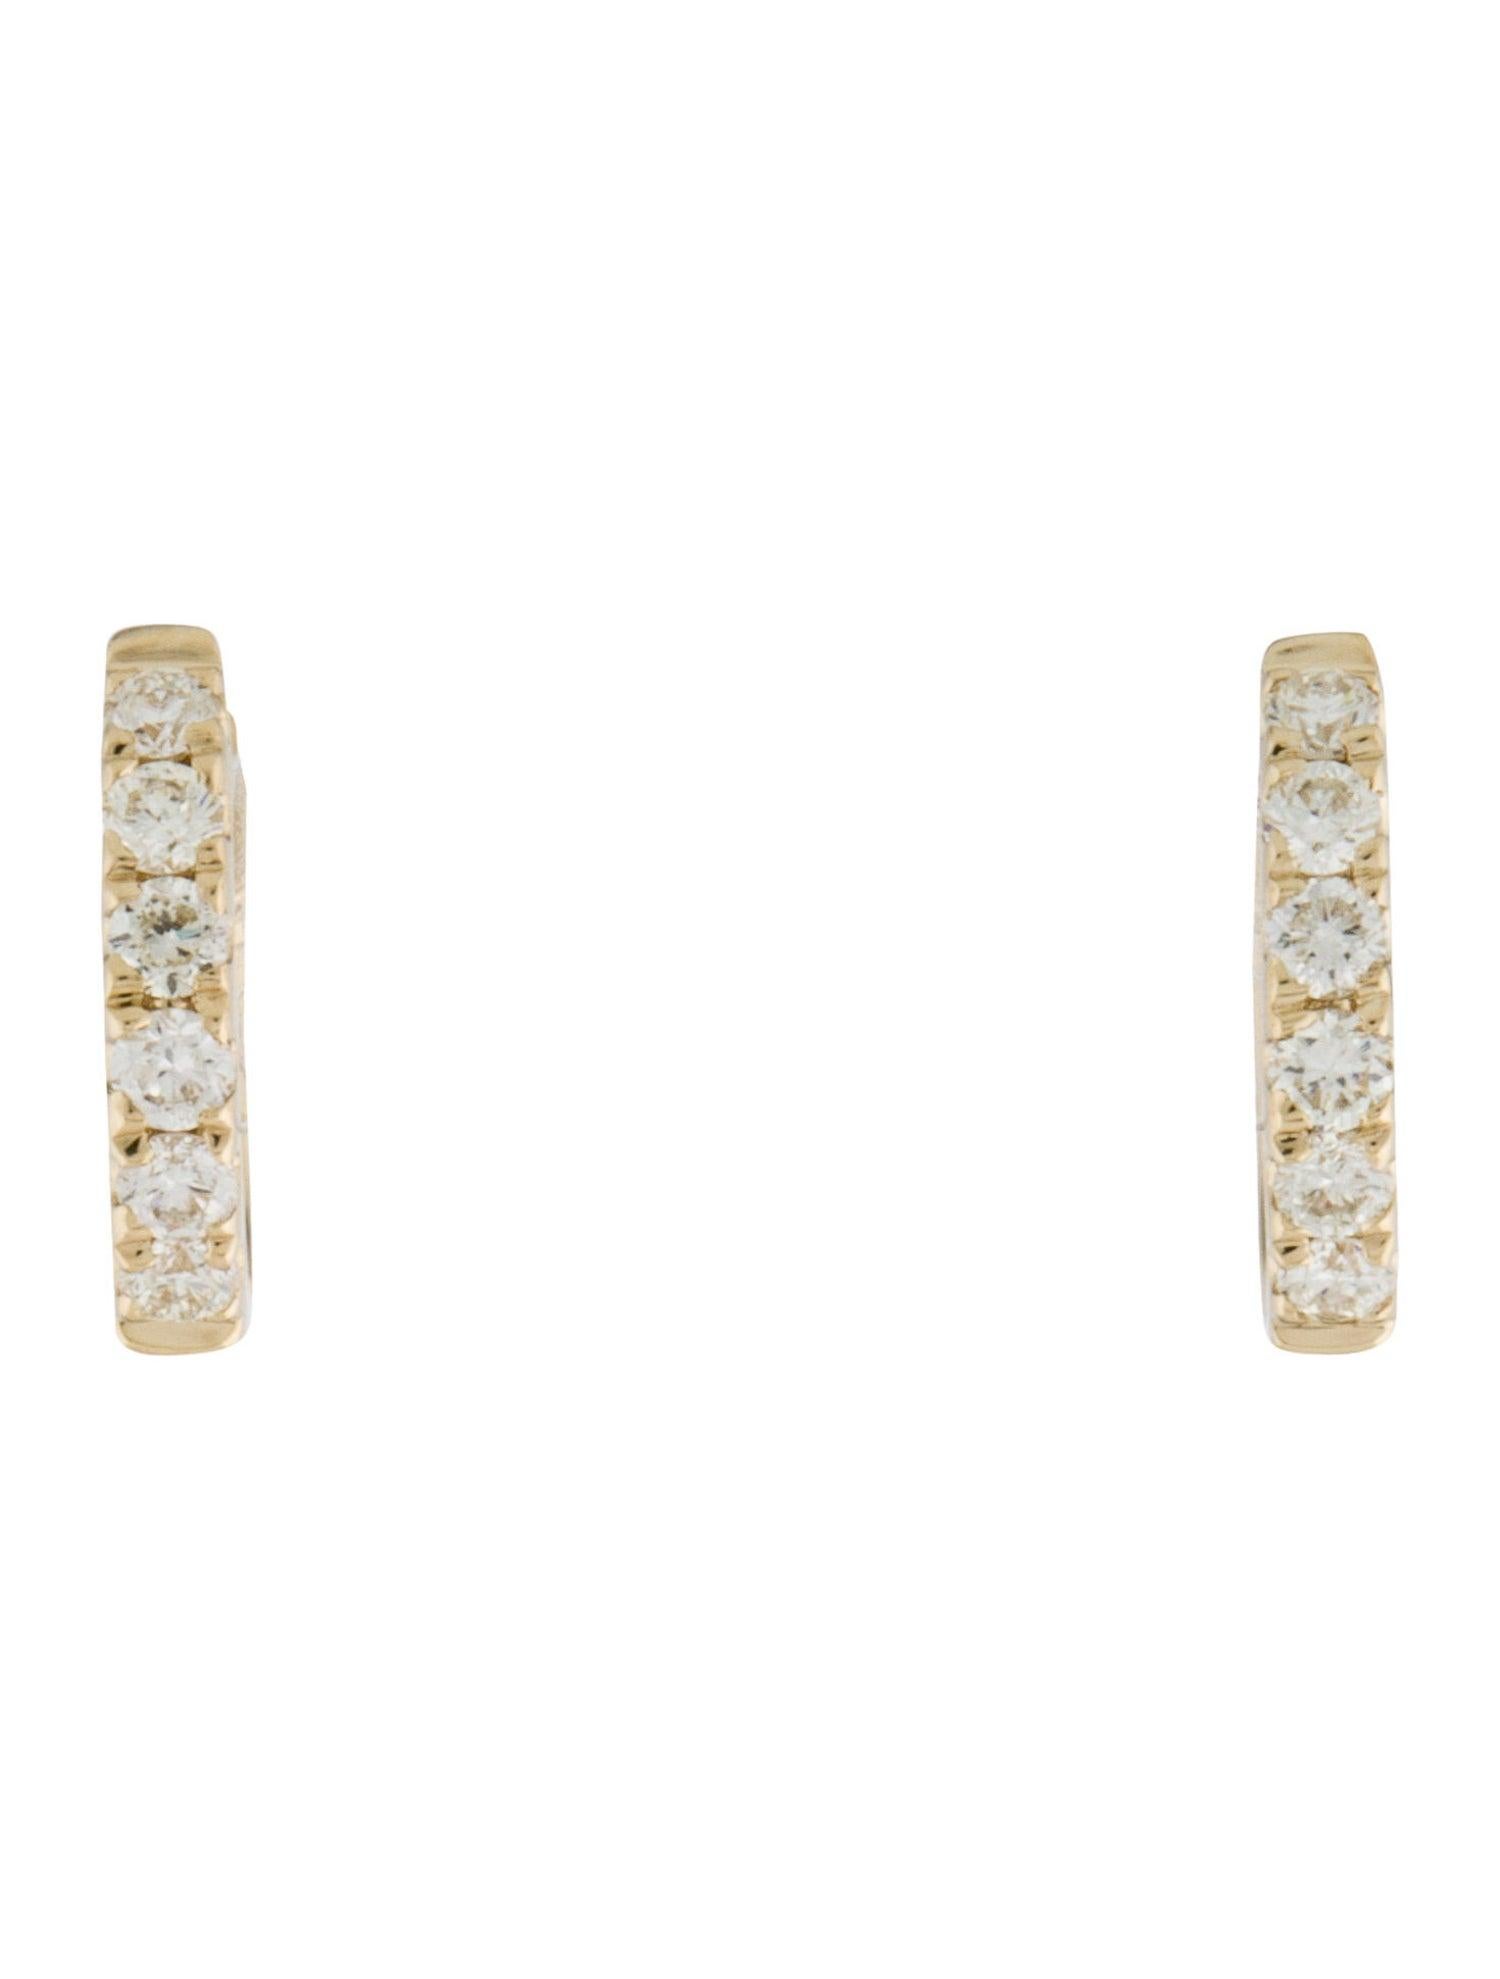 Contemporary 14 Karat Yellow Gold 0.18 Carat Diamond Huggie Hoop Earring For Sale